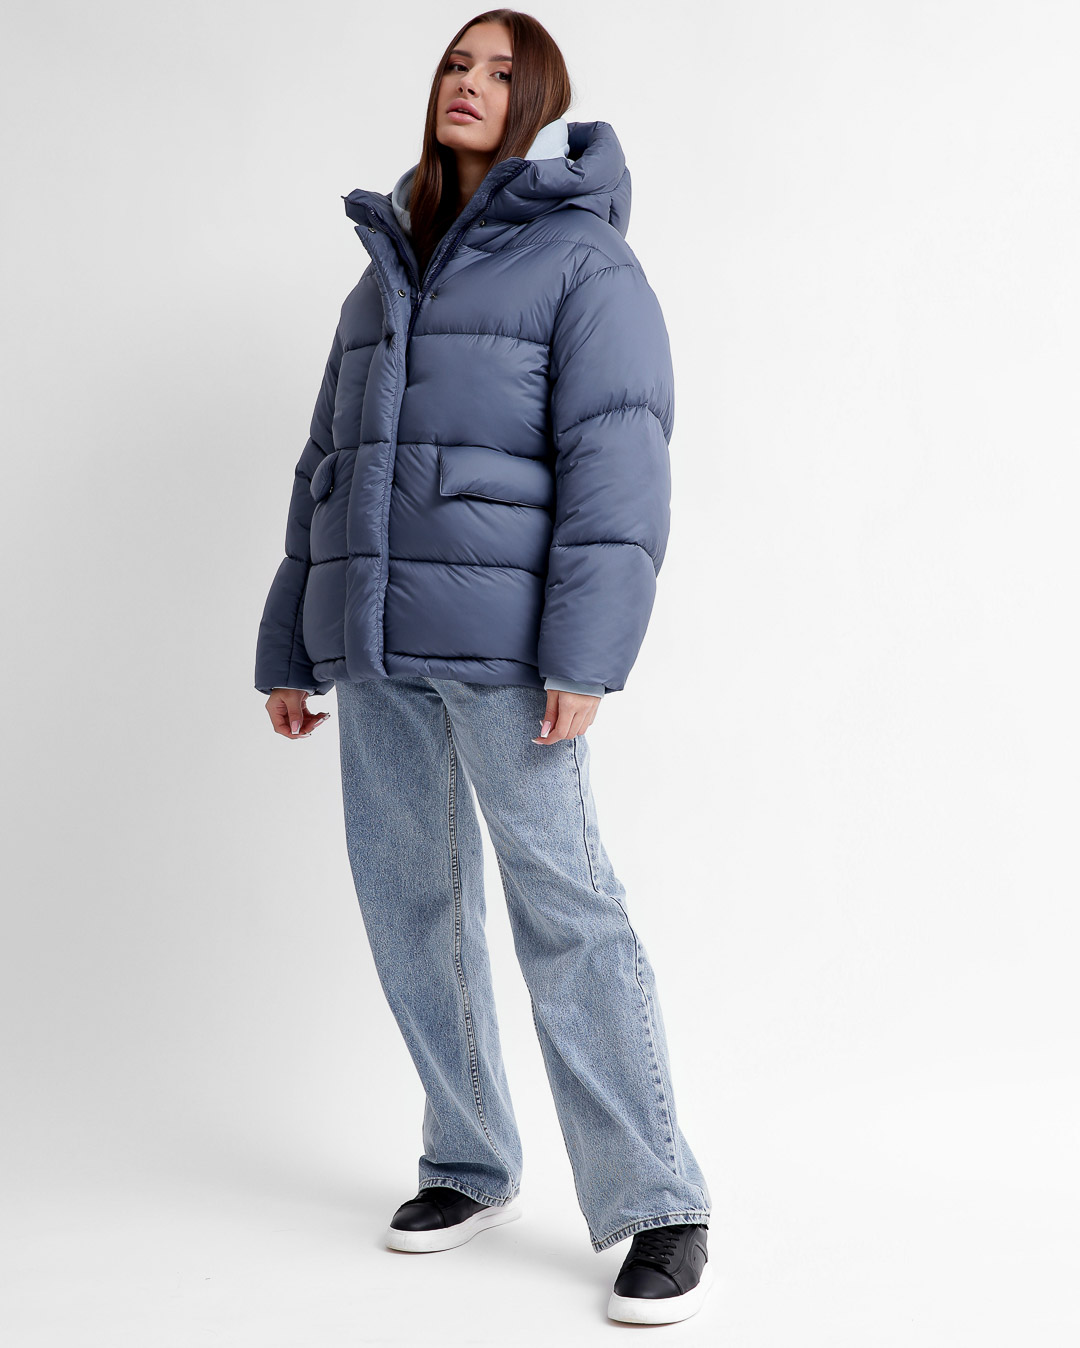 Зимова куртка  LS-8917-35, (Джинс)